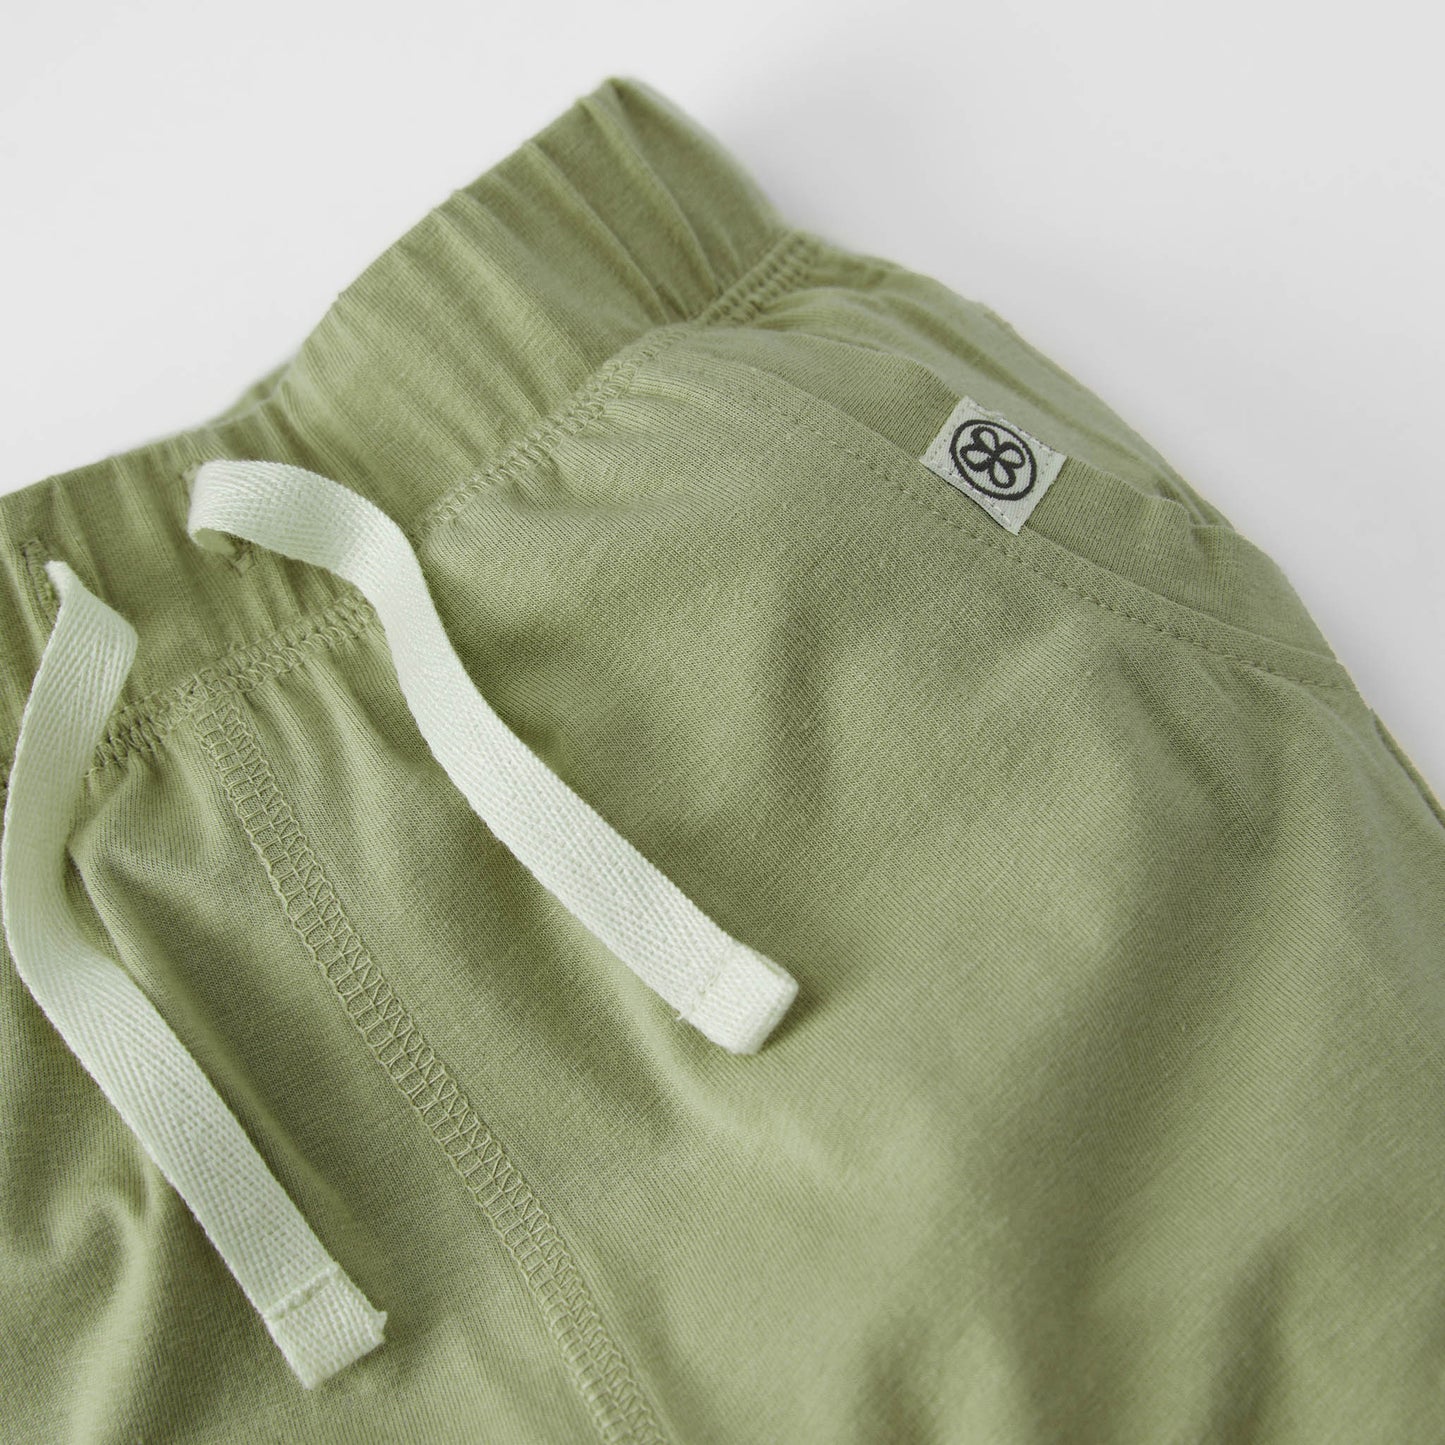 Cloby - Hose mit UV-Schutz "UV Jogger Pants" | olive green